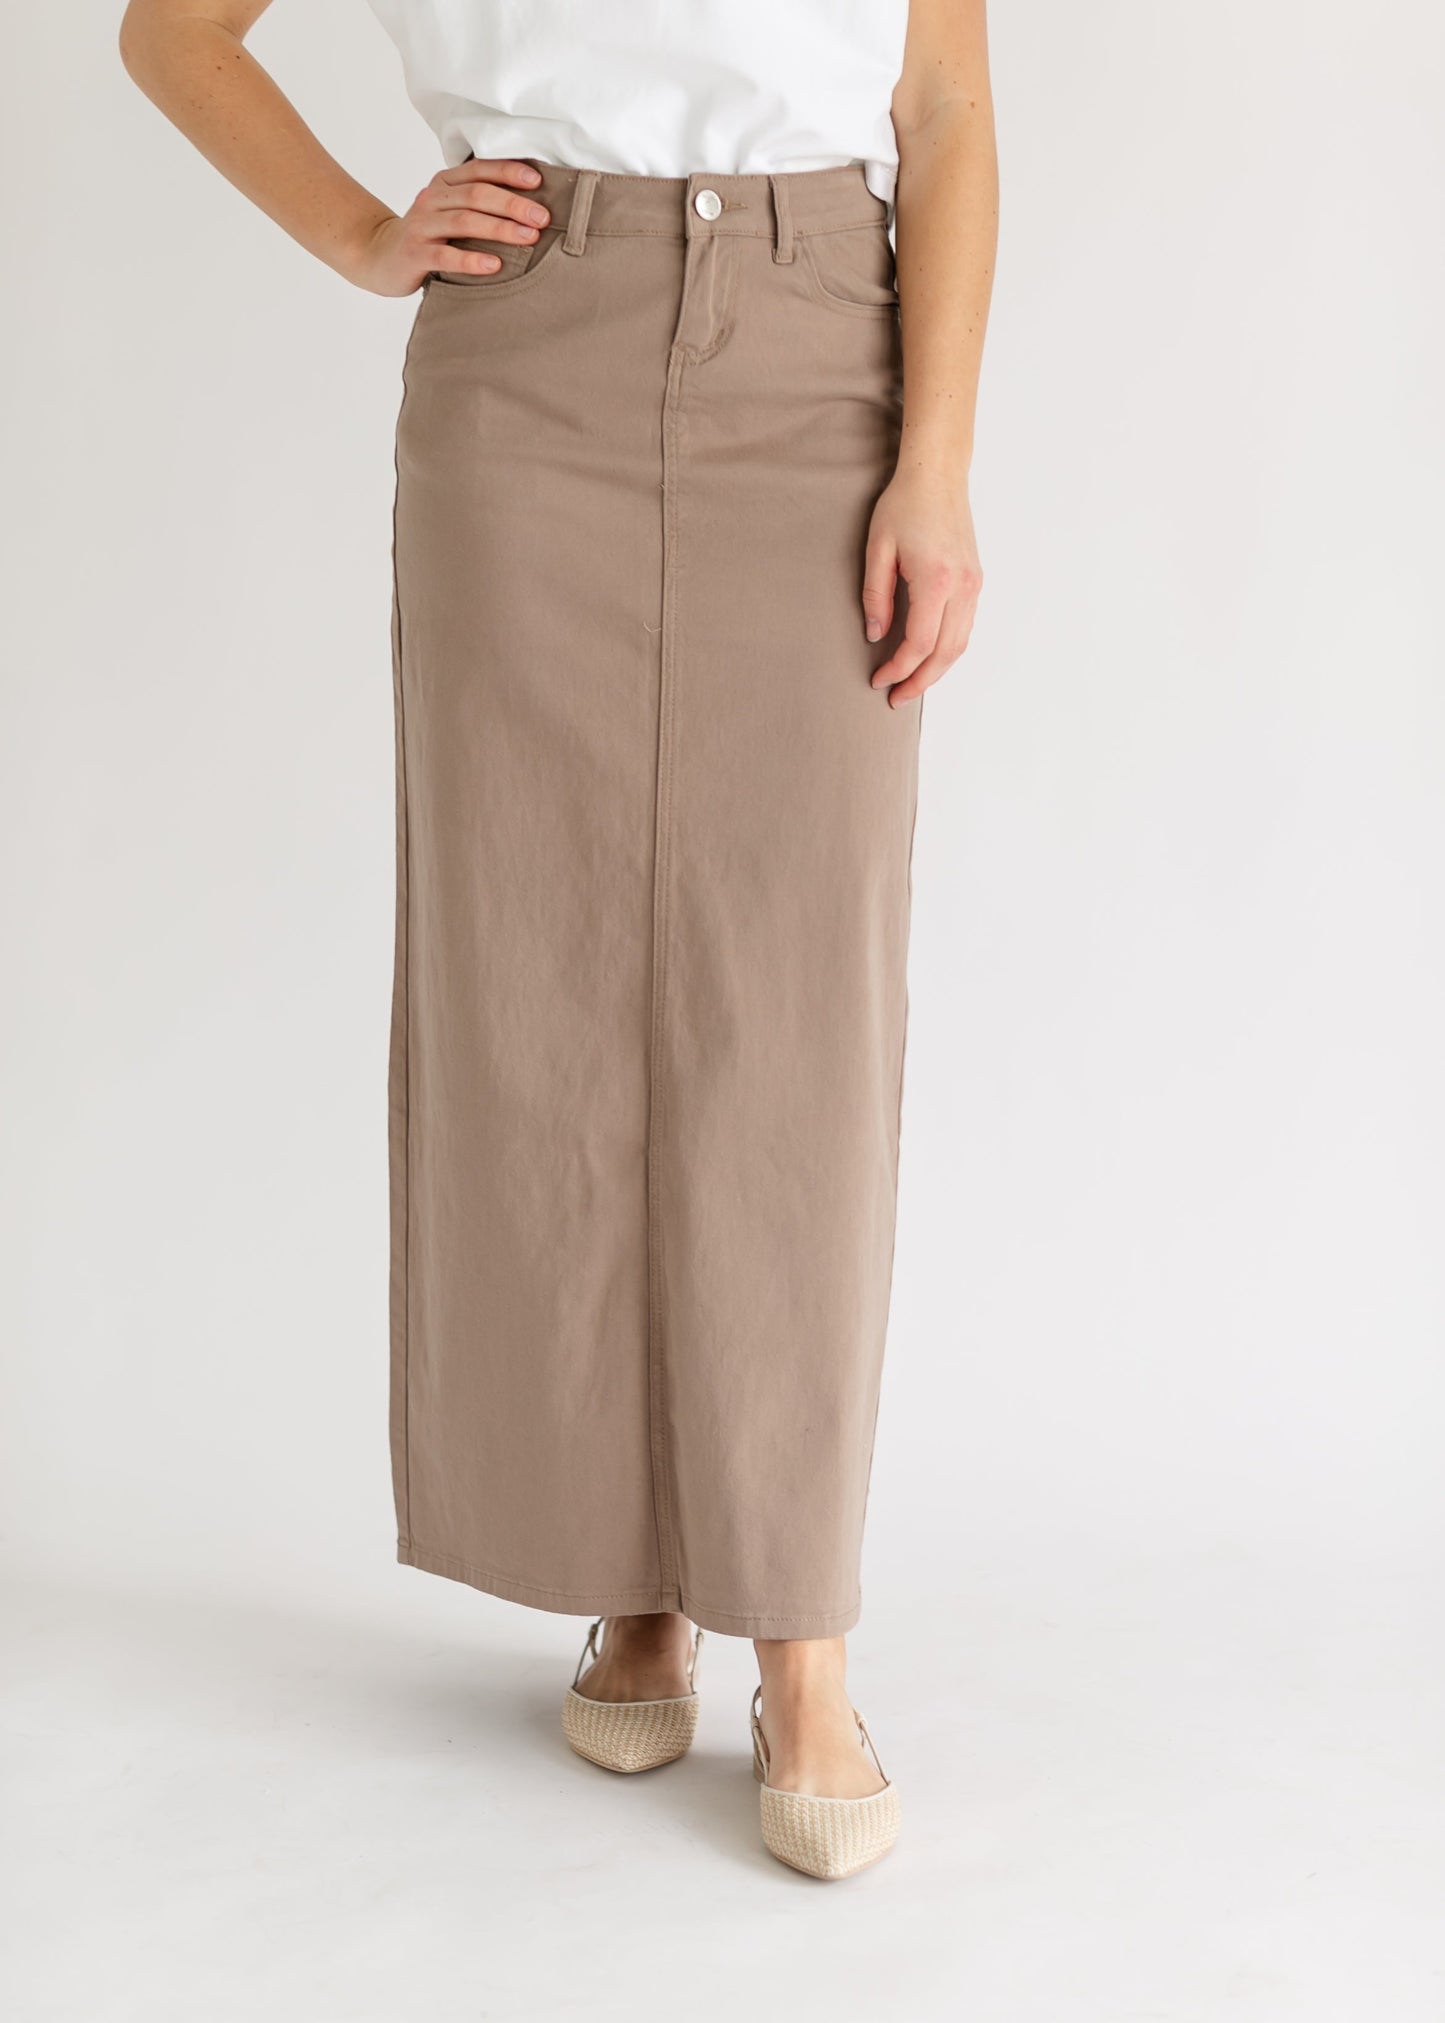 Stella Desert Taupe Long Denim Skirt IC Skirts